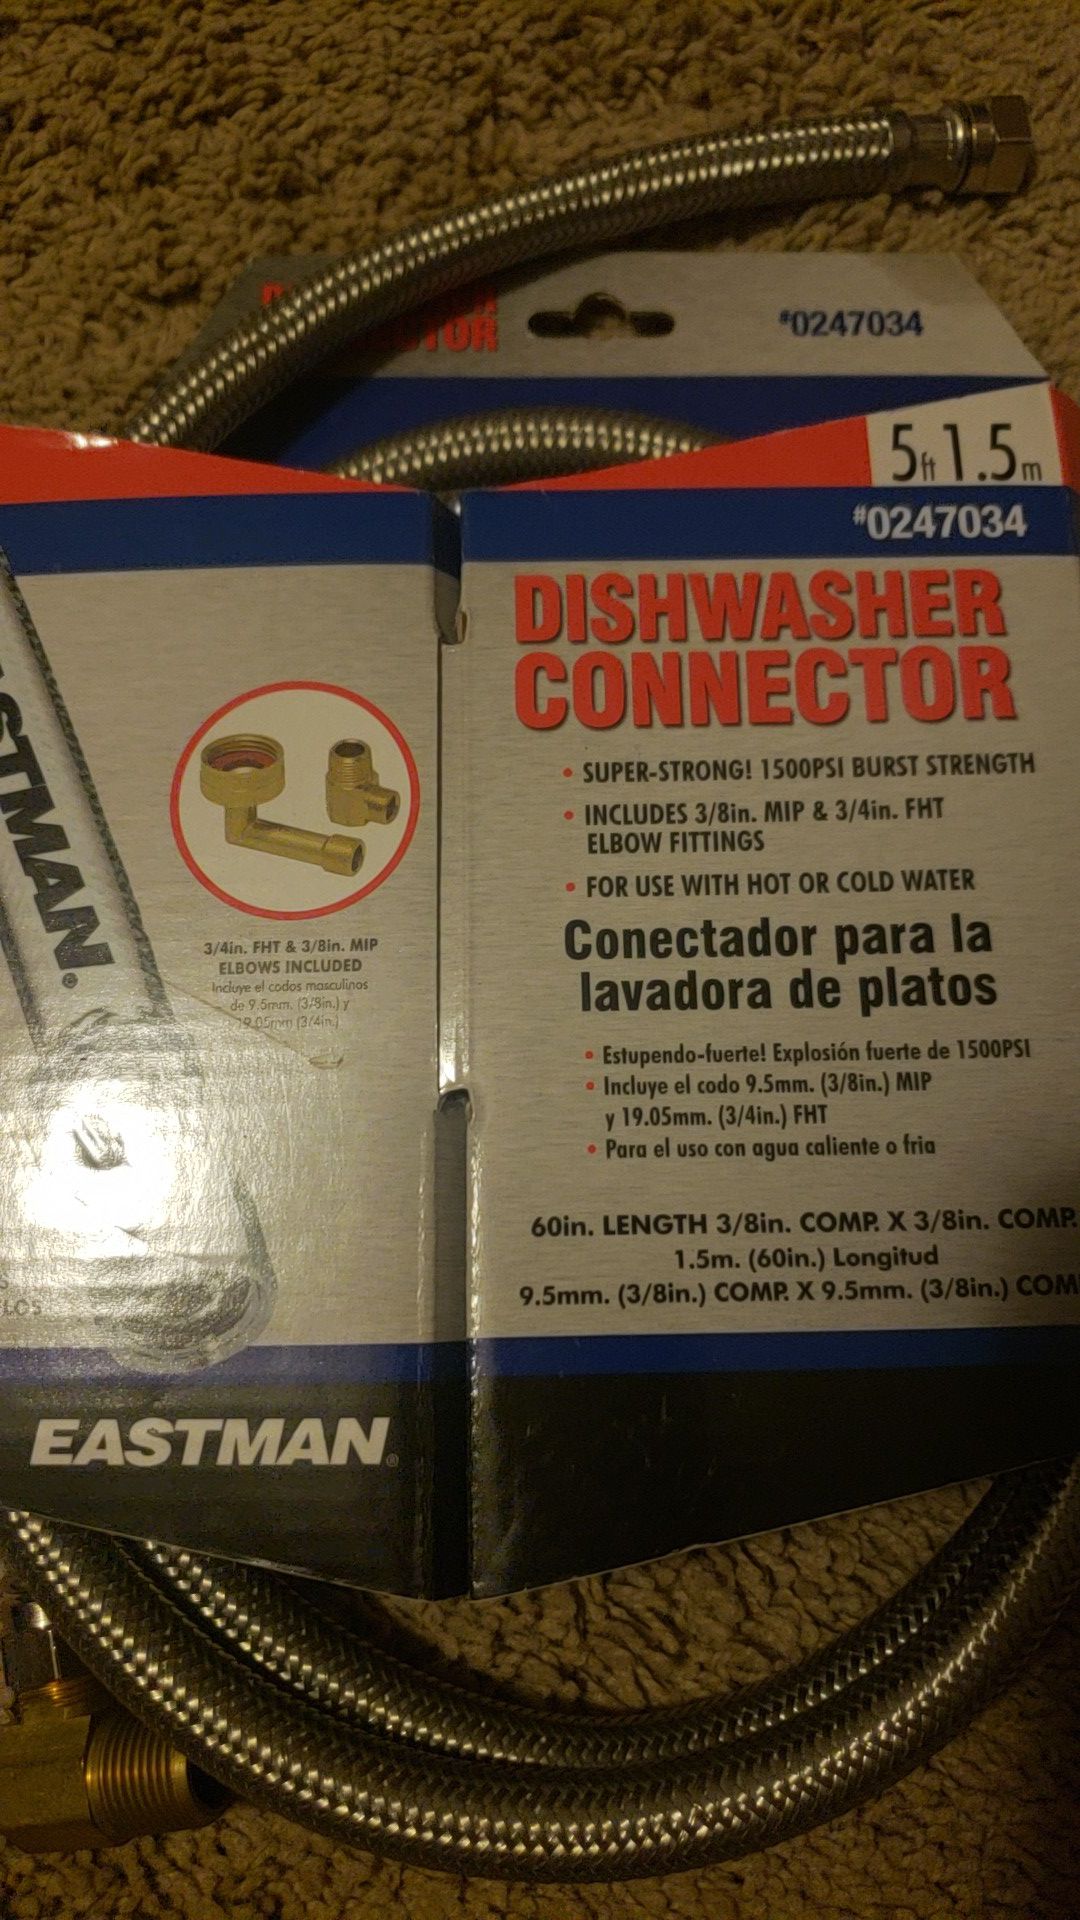 Dishwasher connector